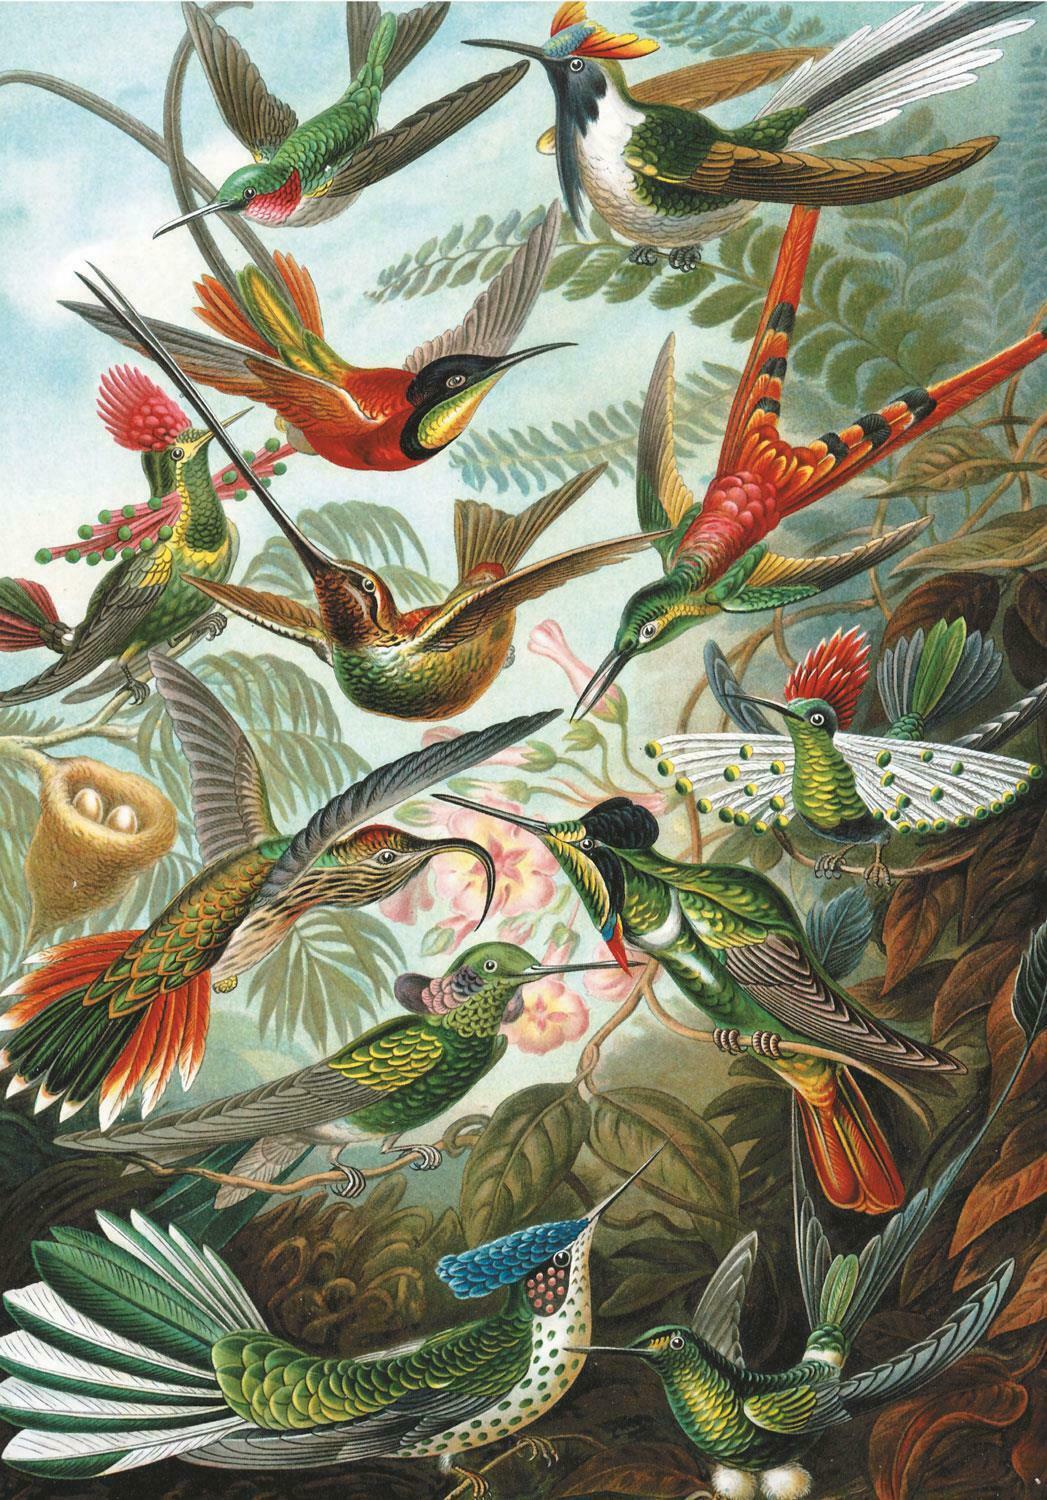 Hummingbirds Birds Jigsaw Puzzle